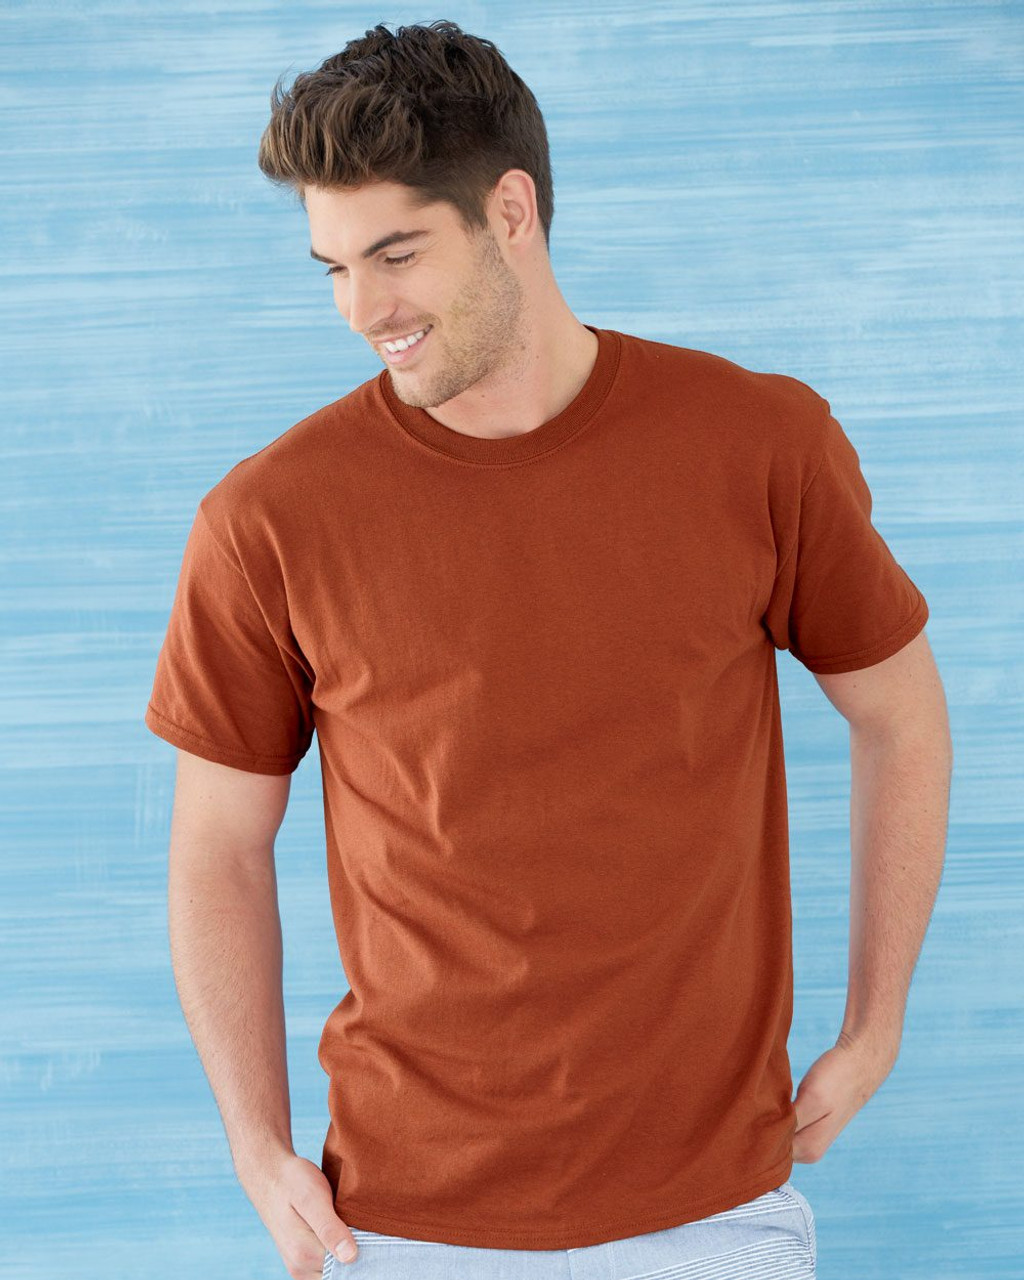 Orange Shirt for Men - Gildan 2000 - Men T-Shirt Cotton Men Shirt